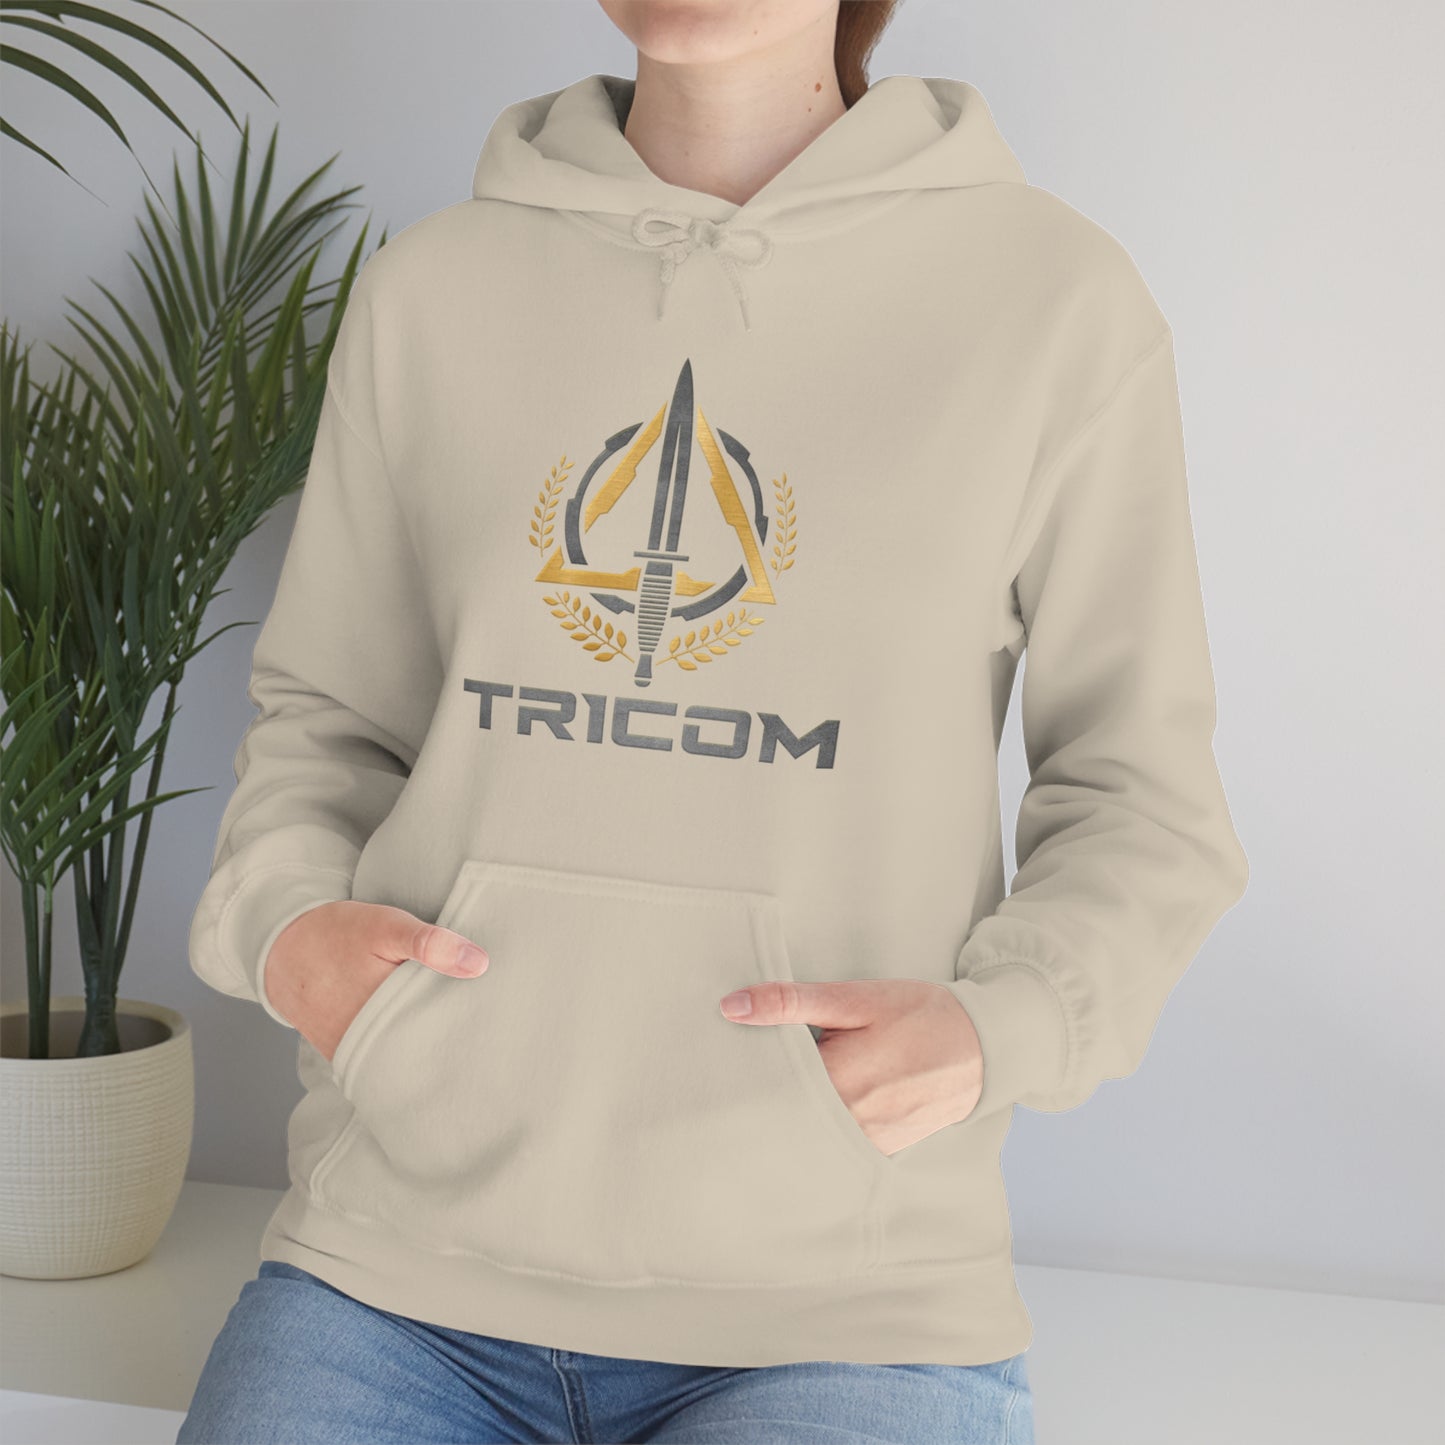 TRICOM Hooded Sweatshirt